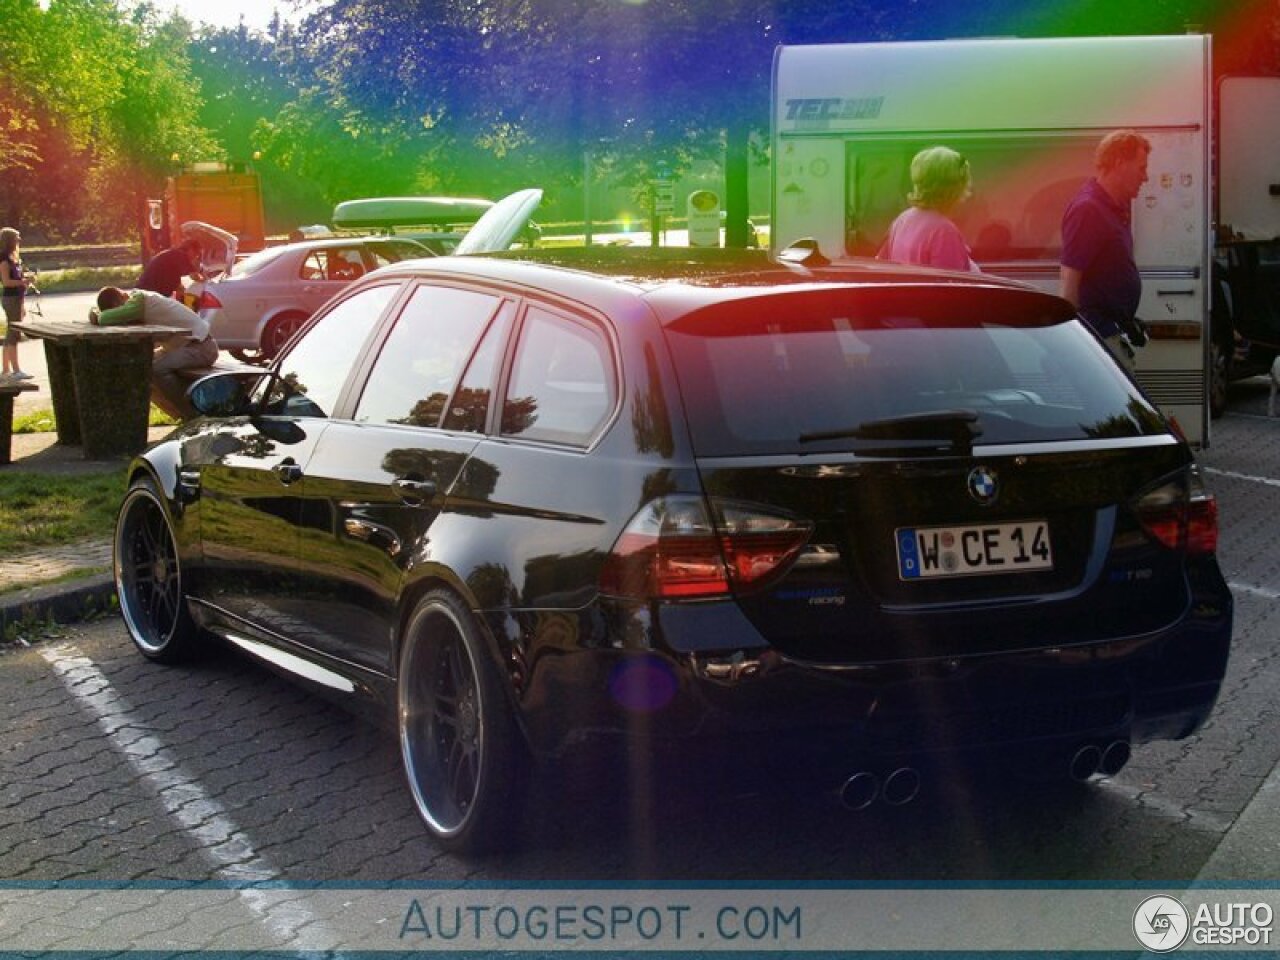 BMW Manhart Performance M3T